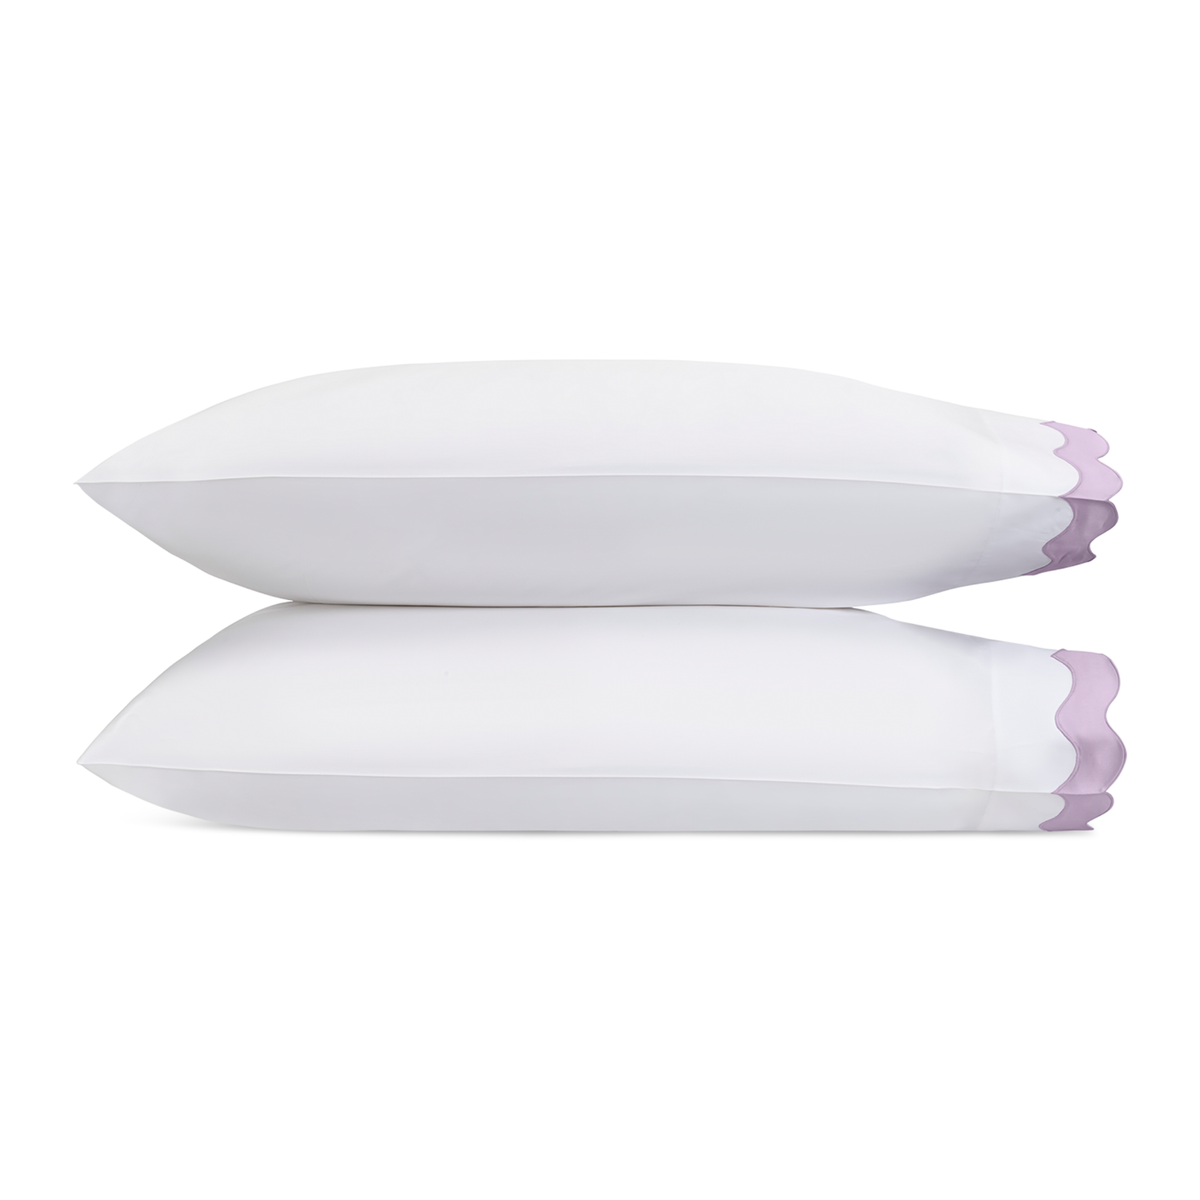 Pair of Pillowcases of Matouk Lorelei Bedding in Violet Color